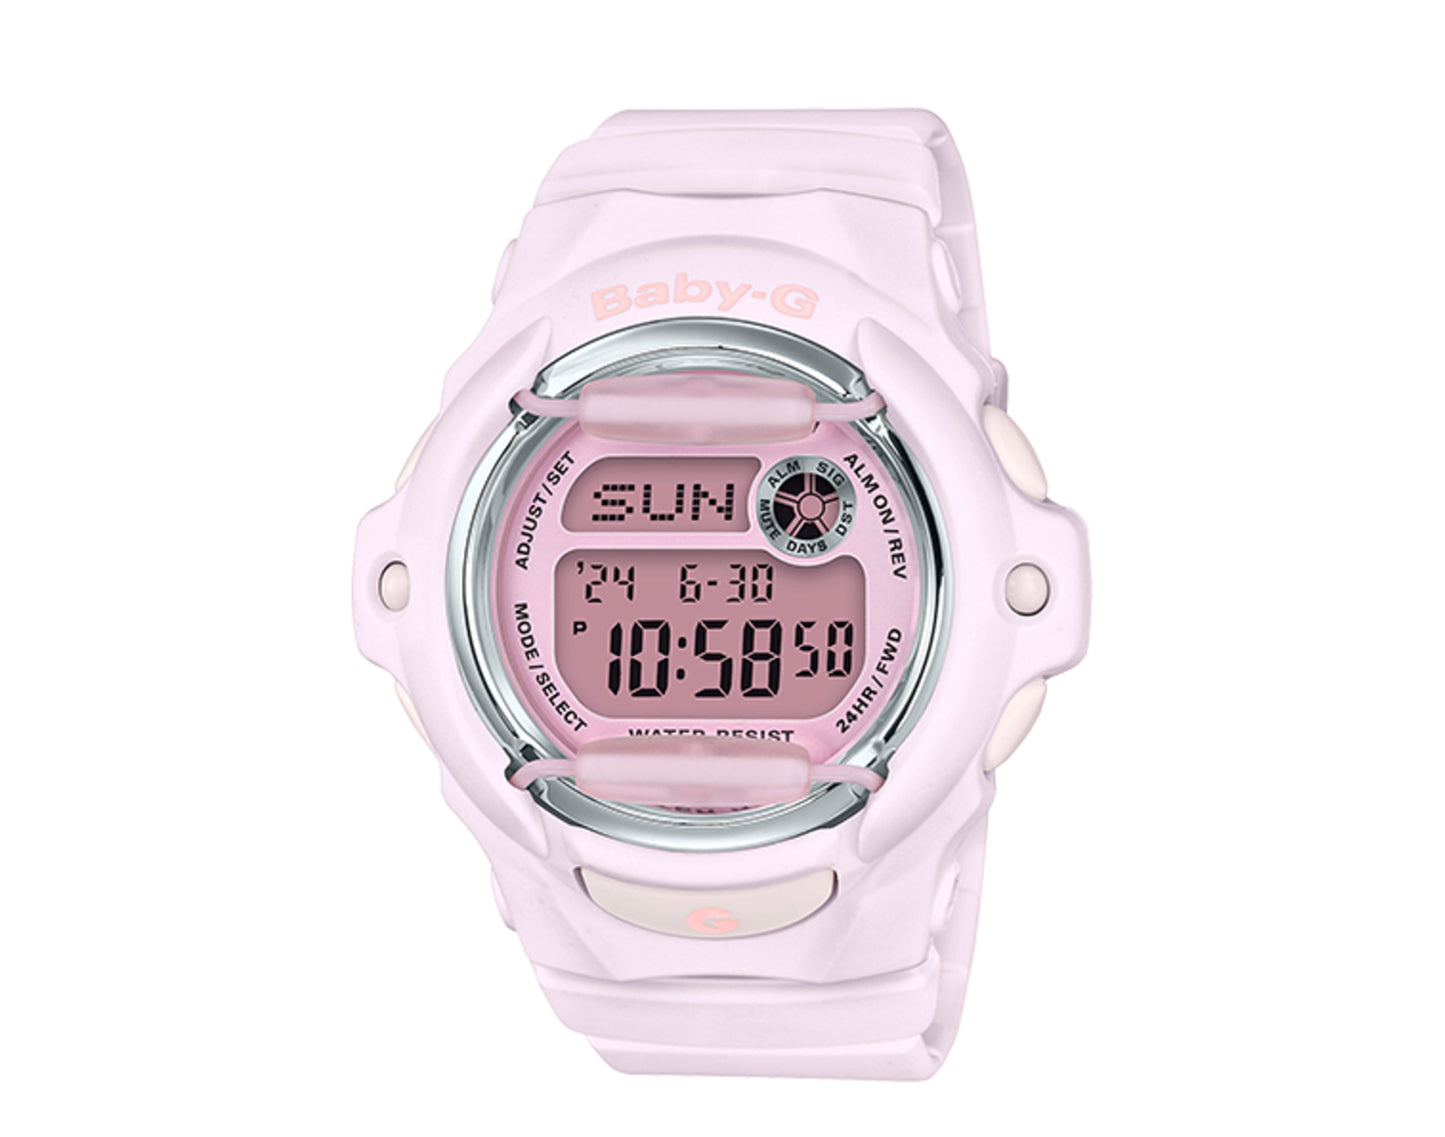 Casio G-Shock Baby-G BG169 Digital Resin Soft Pink Women's Watch BG169M-4